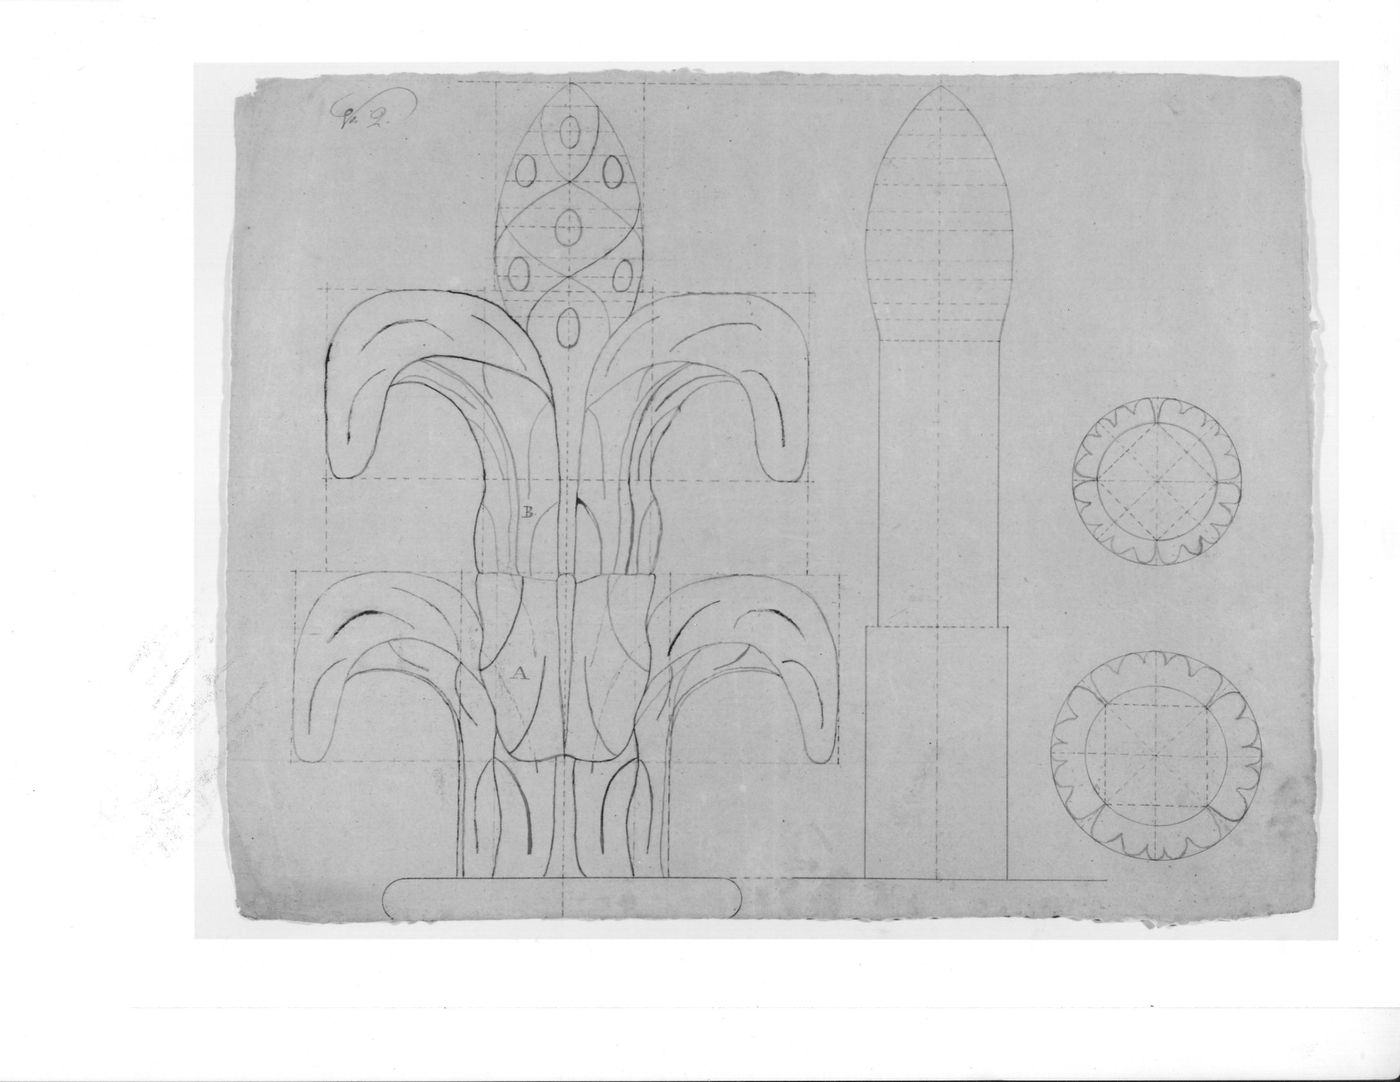 Plans and elevations for a decorative detail for the high altar for Notre-Dame de Montréal